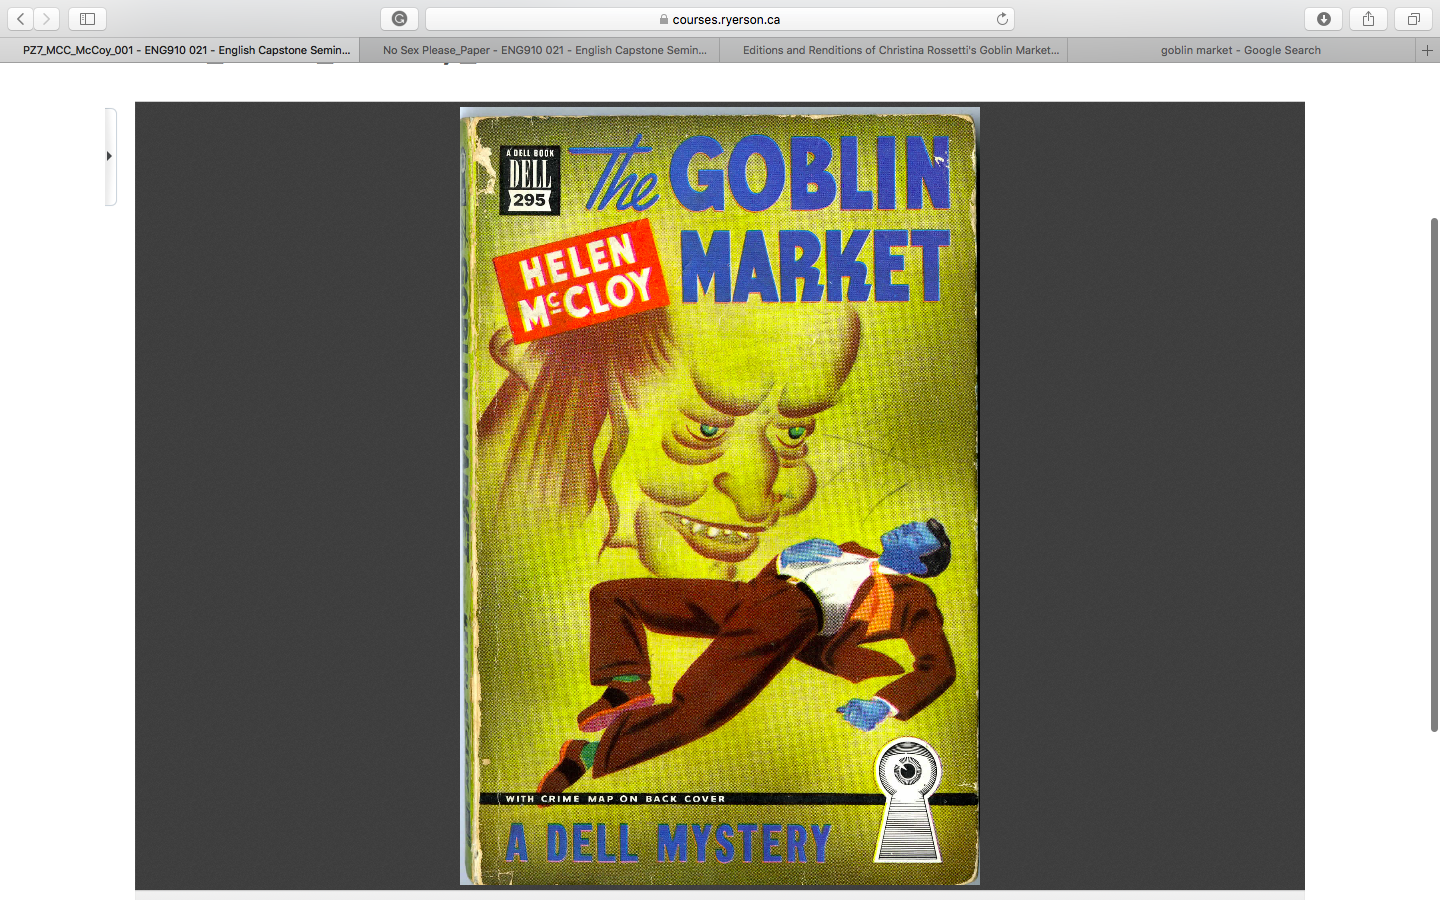 The Goblin Market cover art by Carl Mueller